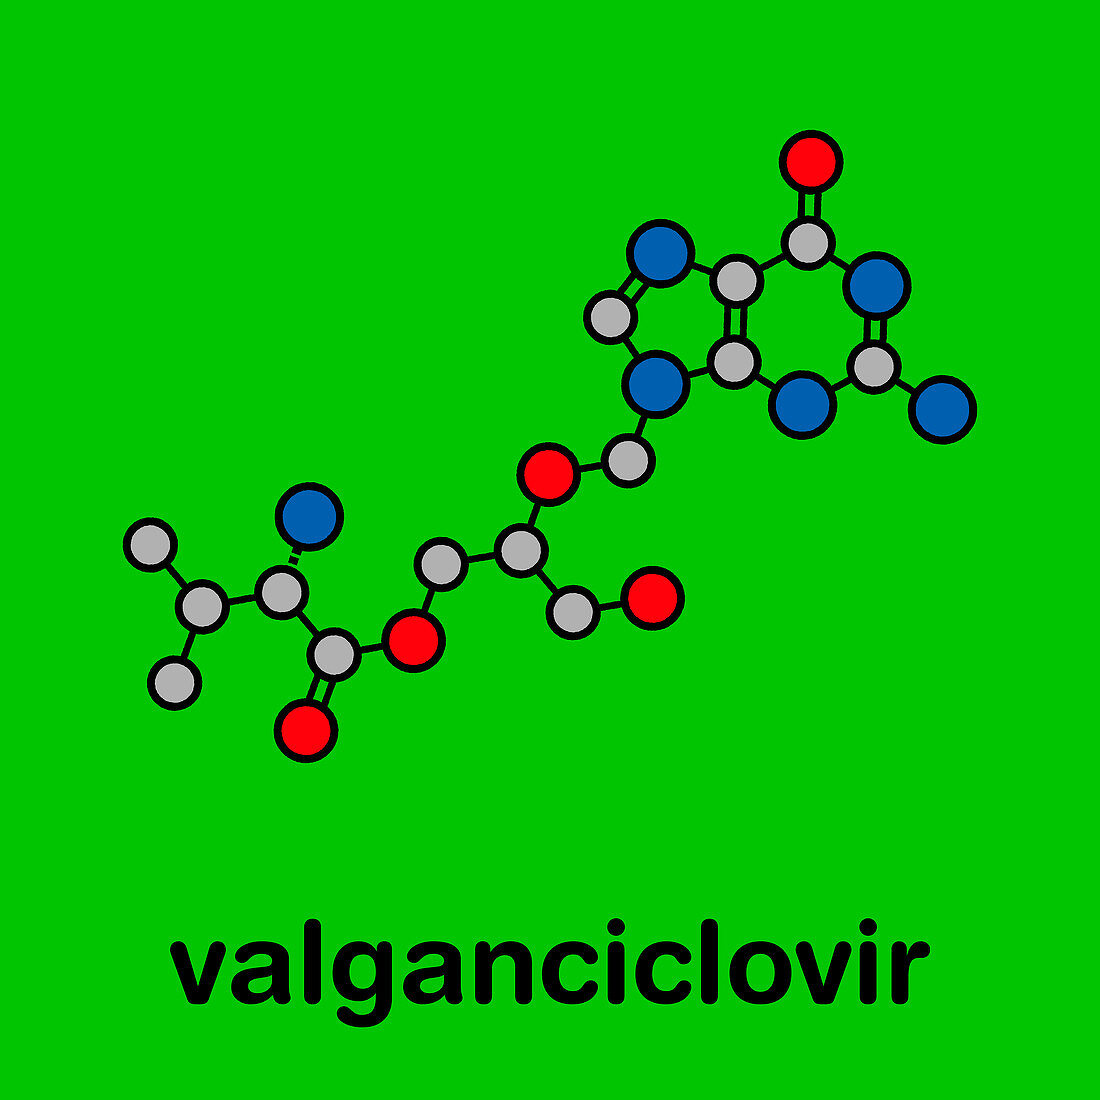 Valganciclovir cytomegalovirus drug, molecular model